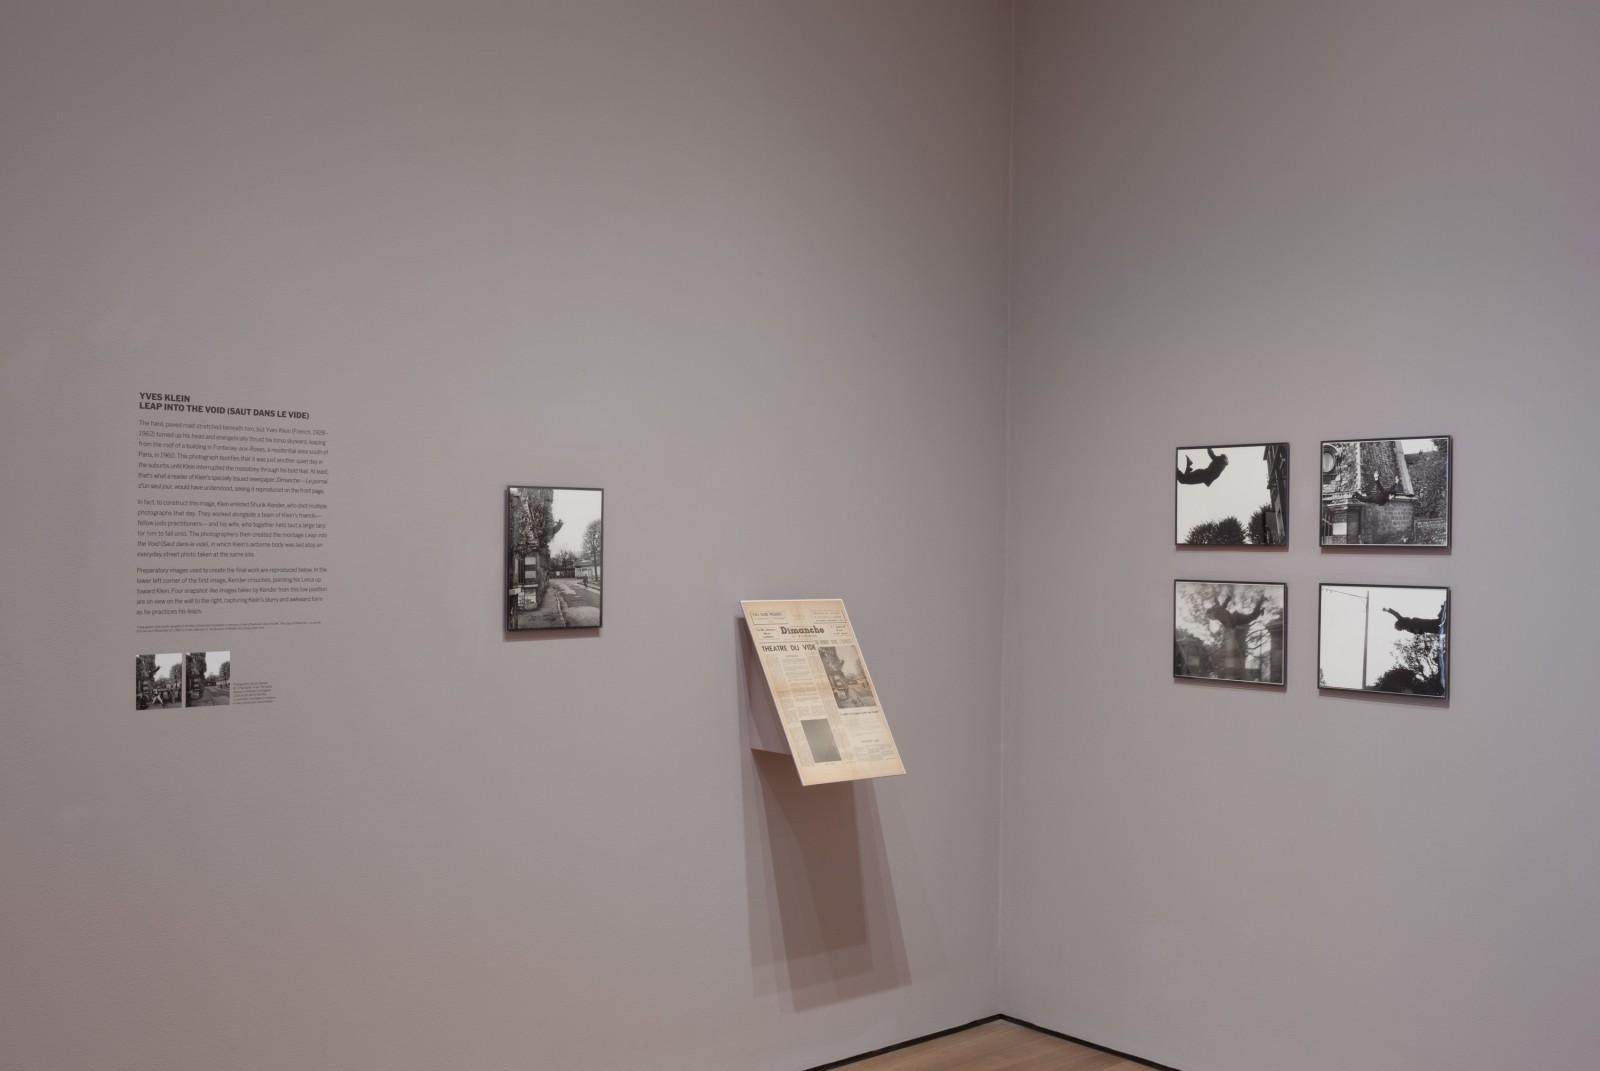 Vue de l'exposition "Art on Camera: Photographs by Shunk-Kender, 1960-1971", MoMa, 2015